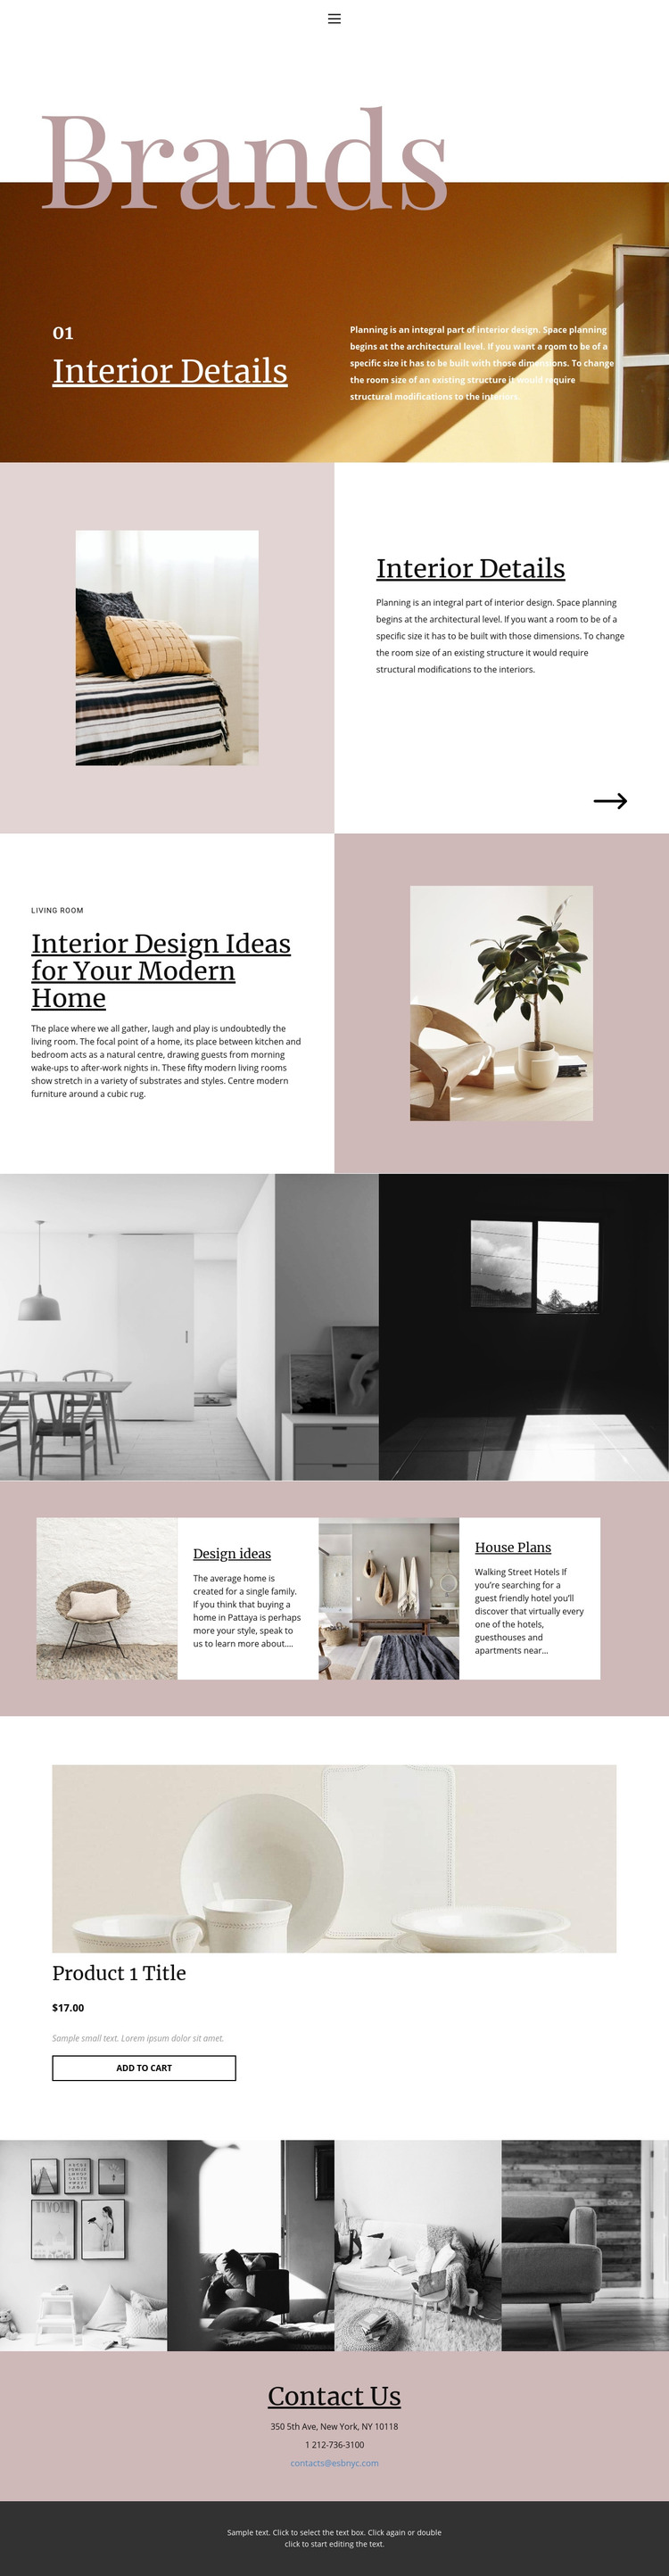 I am an interior designer Homepage Design